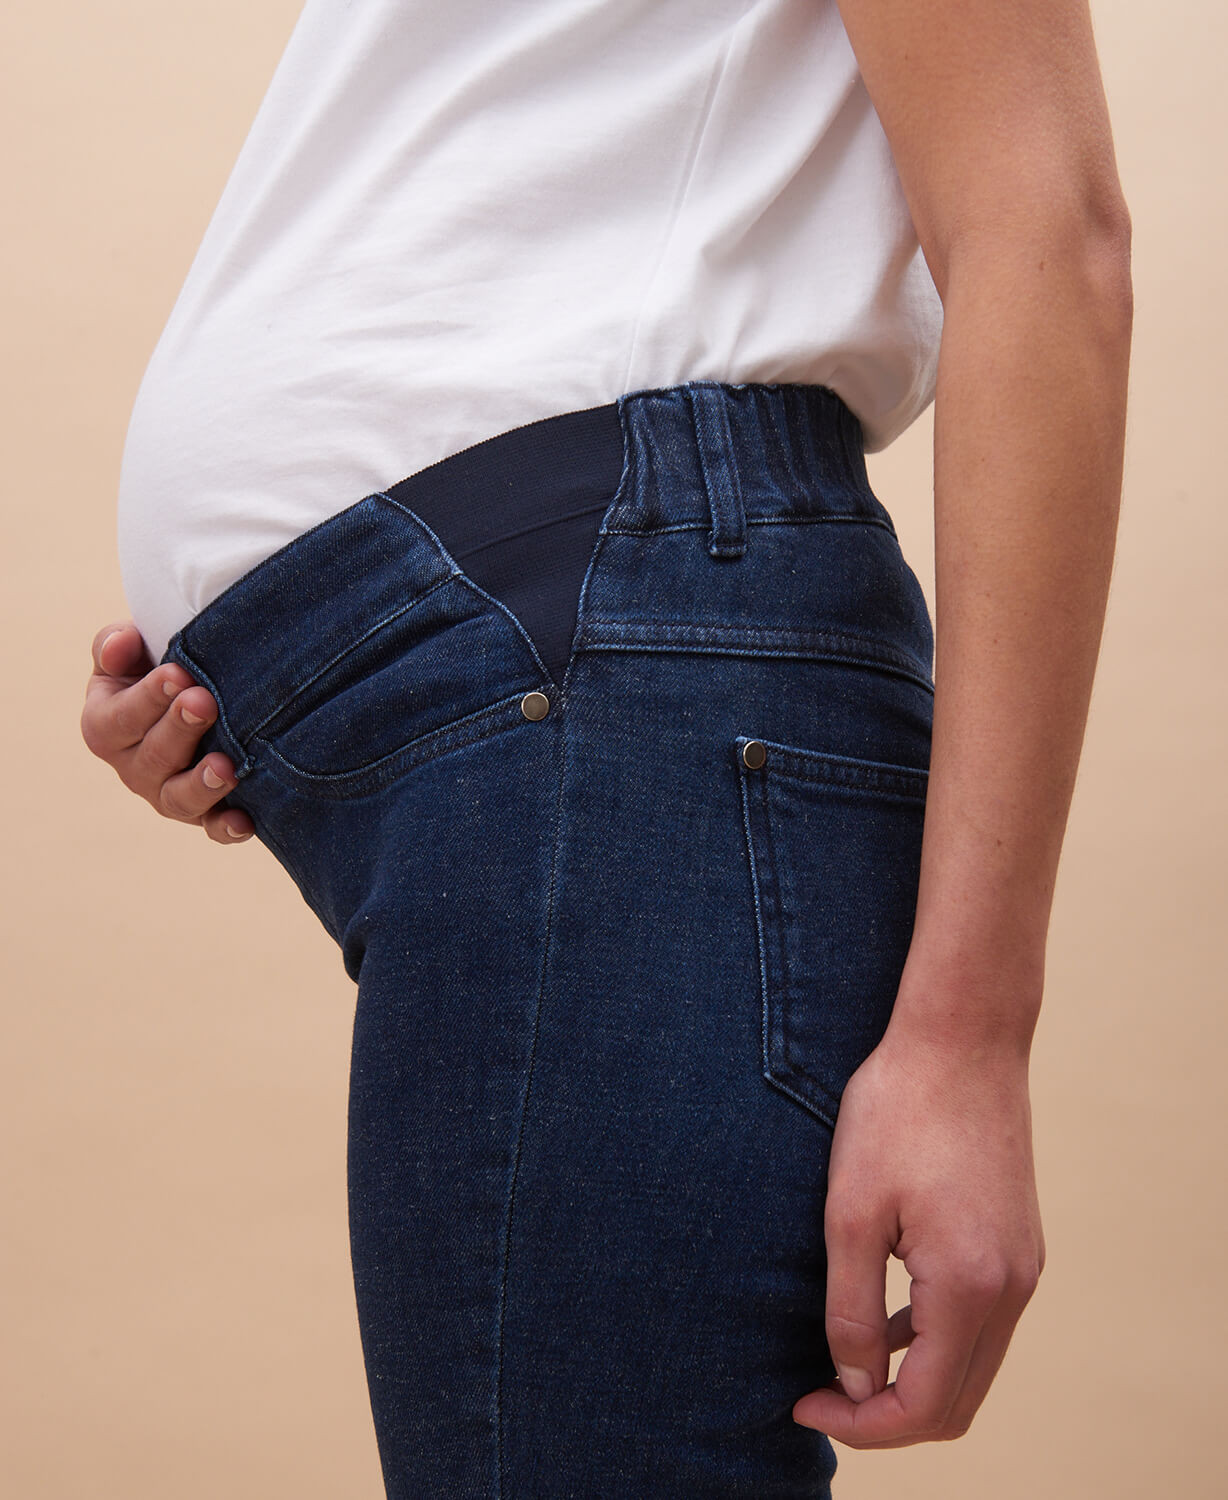 https://www.jolibump.com/3369-large_default/hemp-blue-slim-pregnancy-jeans.jpg